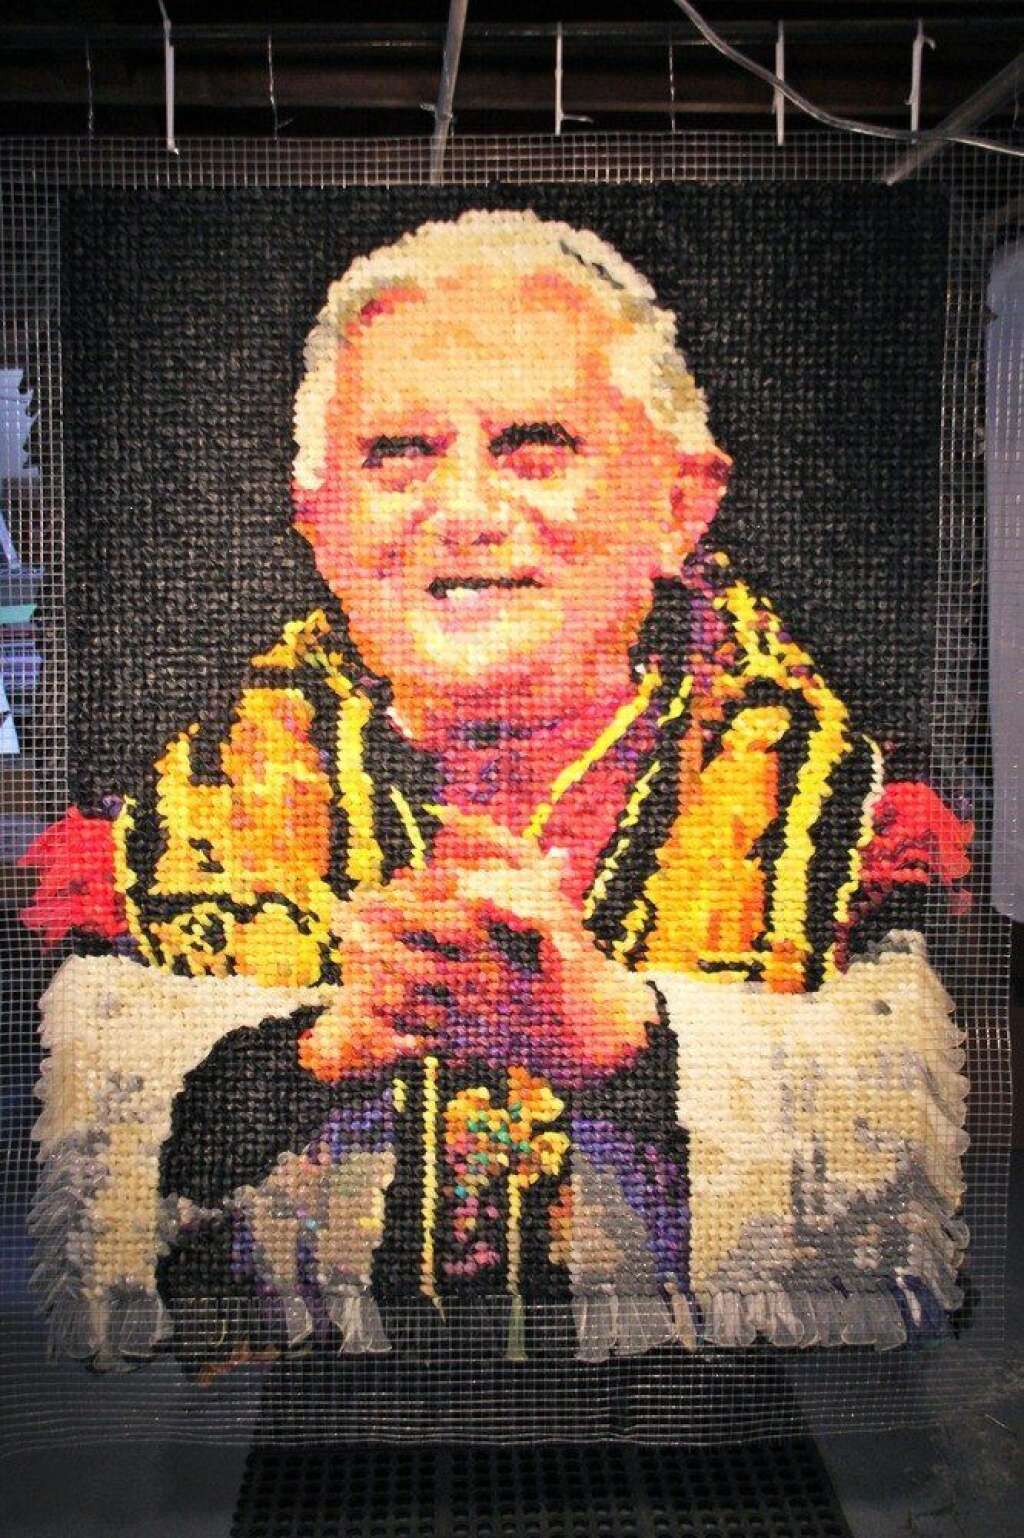 Pope Condom Portrait - <a href="http://shorewood.patch.com/articles/a-prophylactic-portrait-of-the-pope#photo-13726089" target="_blank">Adam W. McCoy</a>